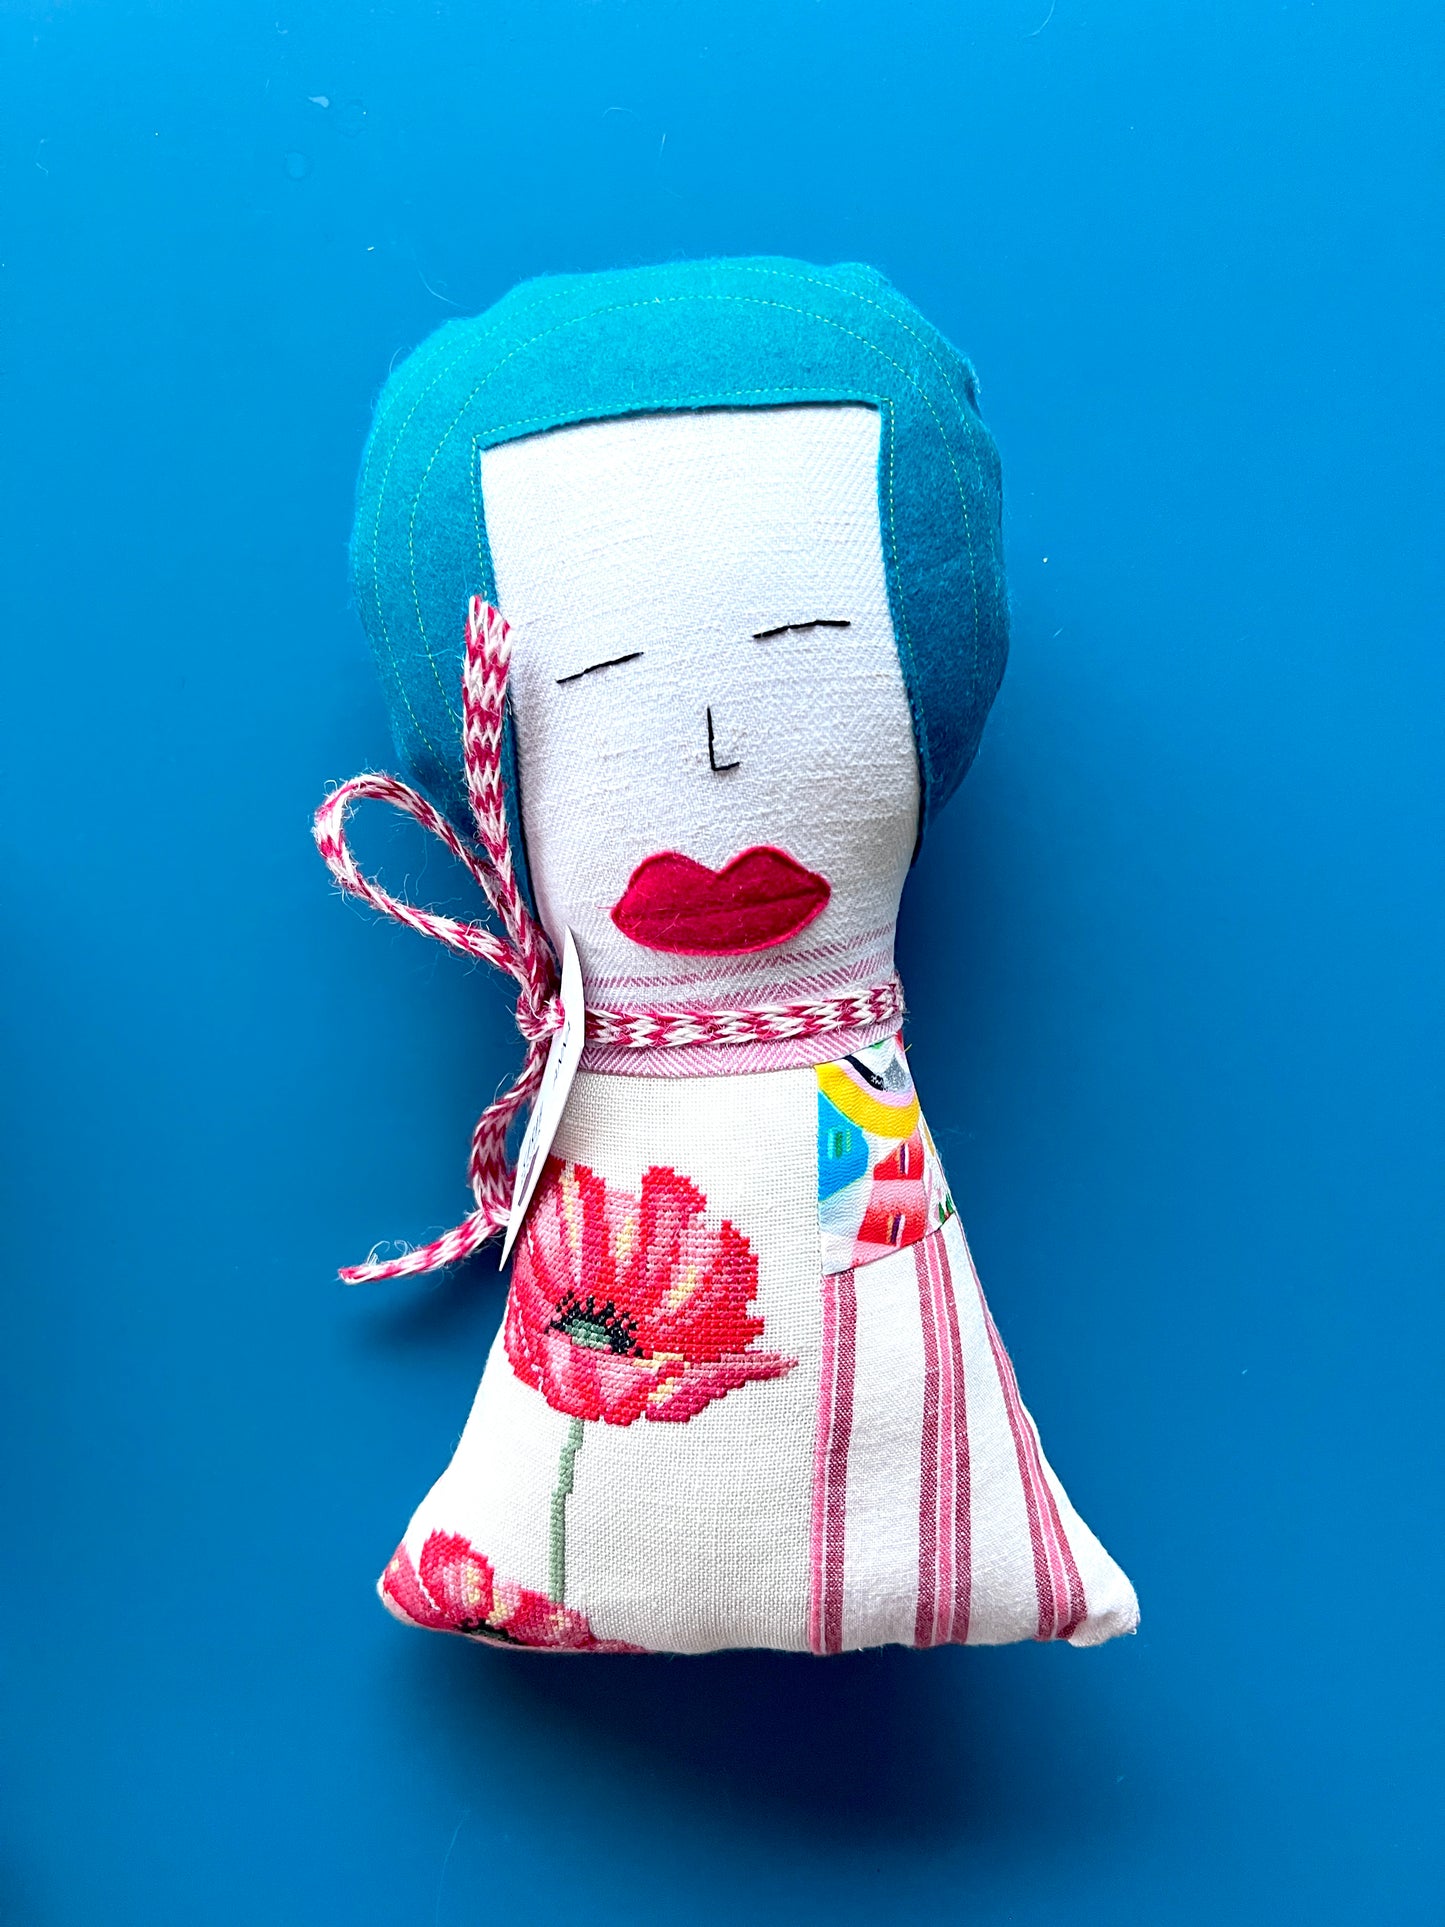 Handmade doll “Anna”